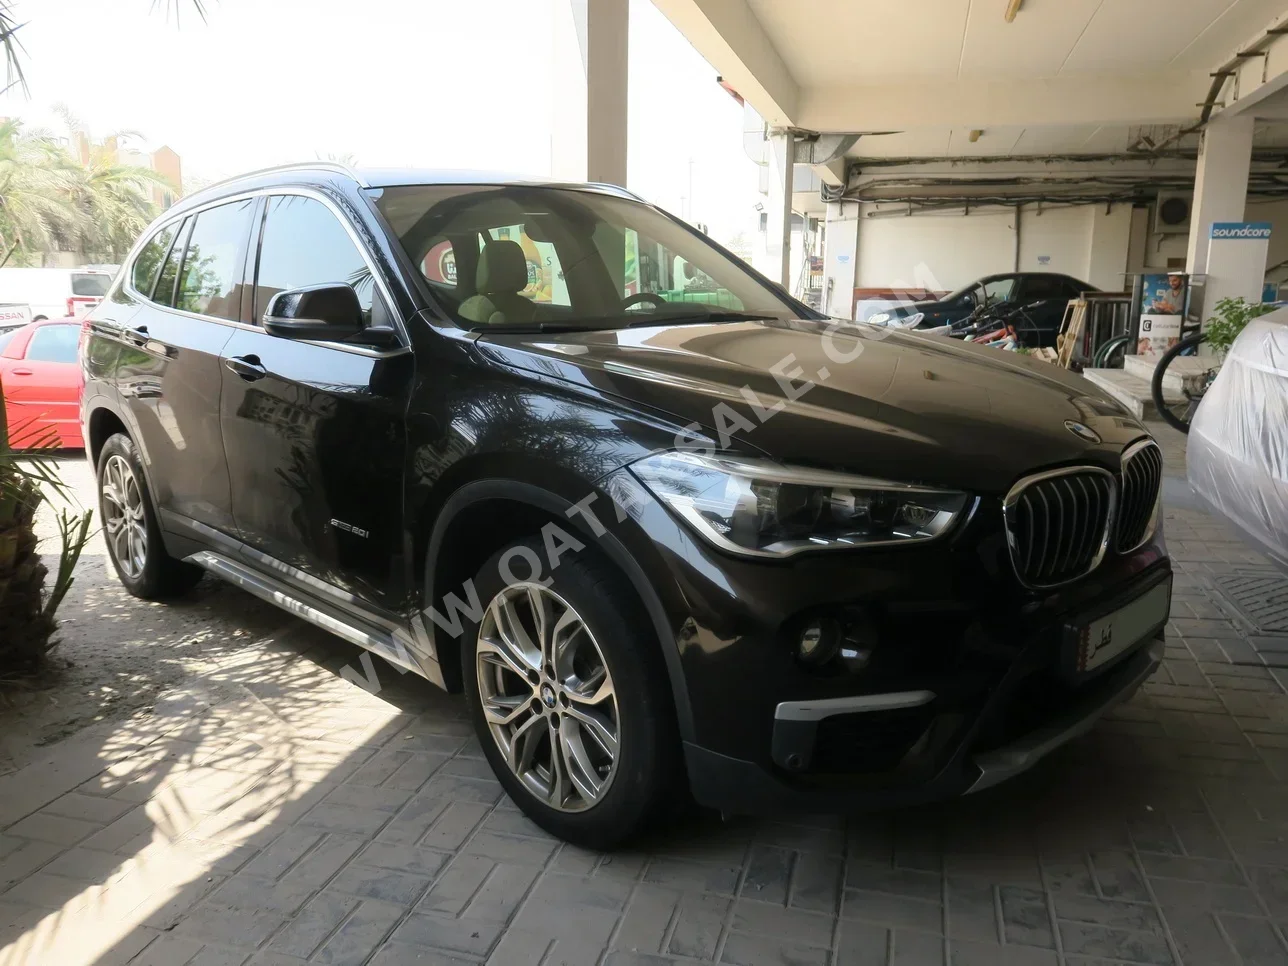 BMW  X-Series  X1  2016  Automatic  109٬000 Km  4 Cylinder  All Wheel Drive (AWD)  SUV  Black